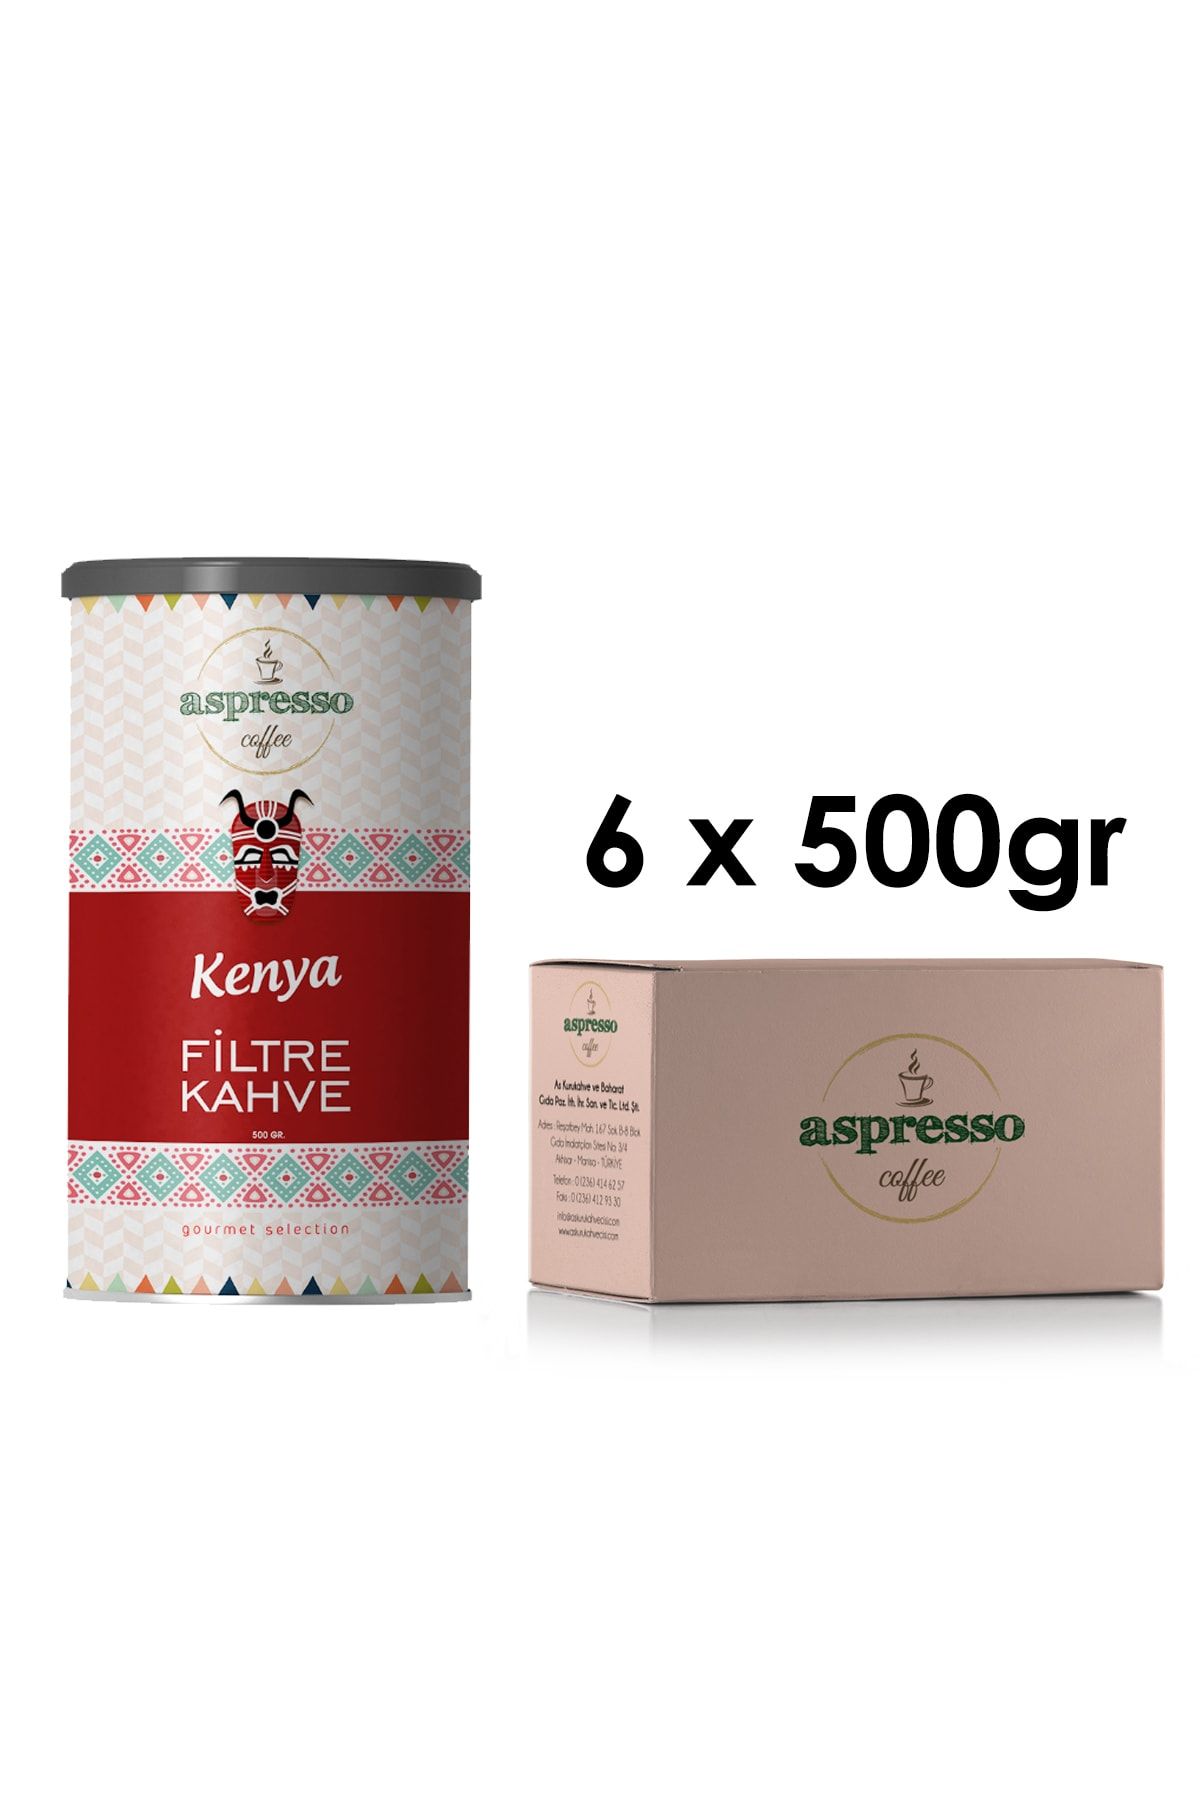 aspresso Kenya Filtre Kahve 500 Gr. Teneke Kutu X 6 Adet